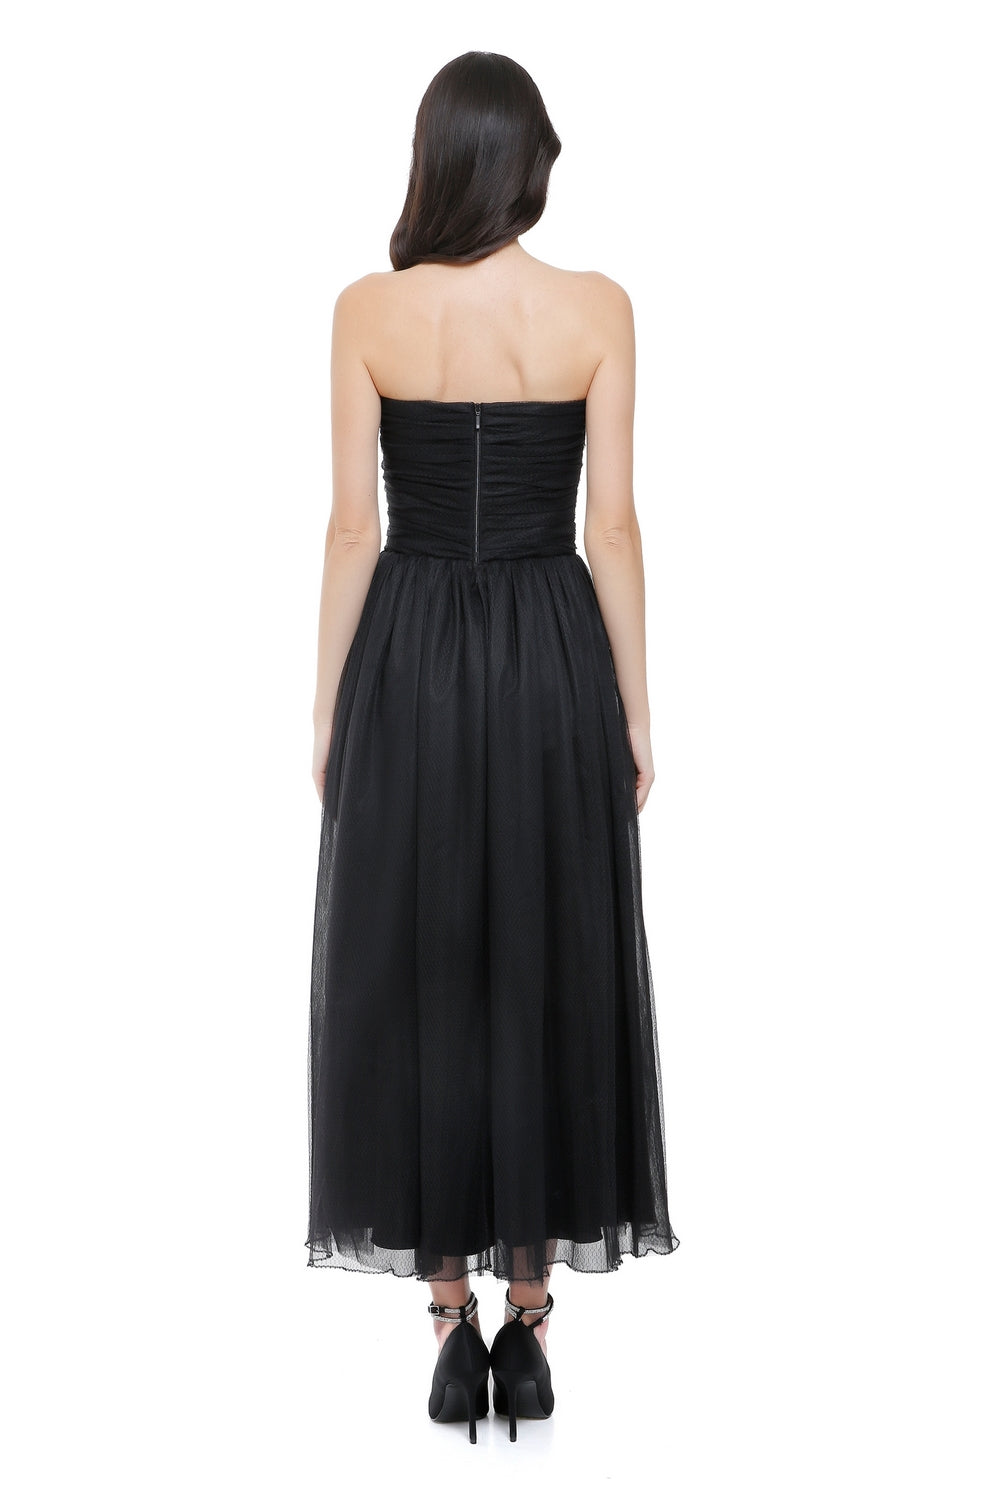 Suzi Tulle Black Corset Dress